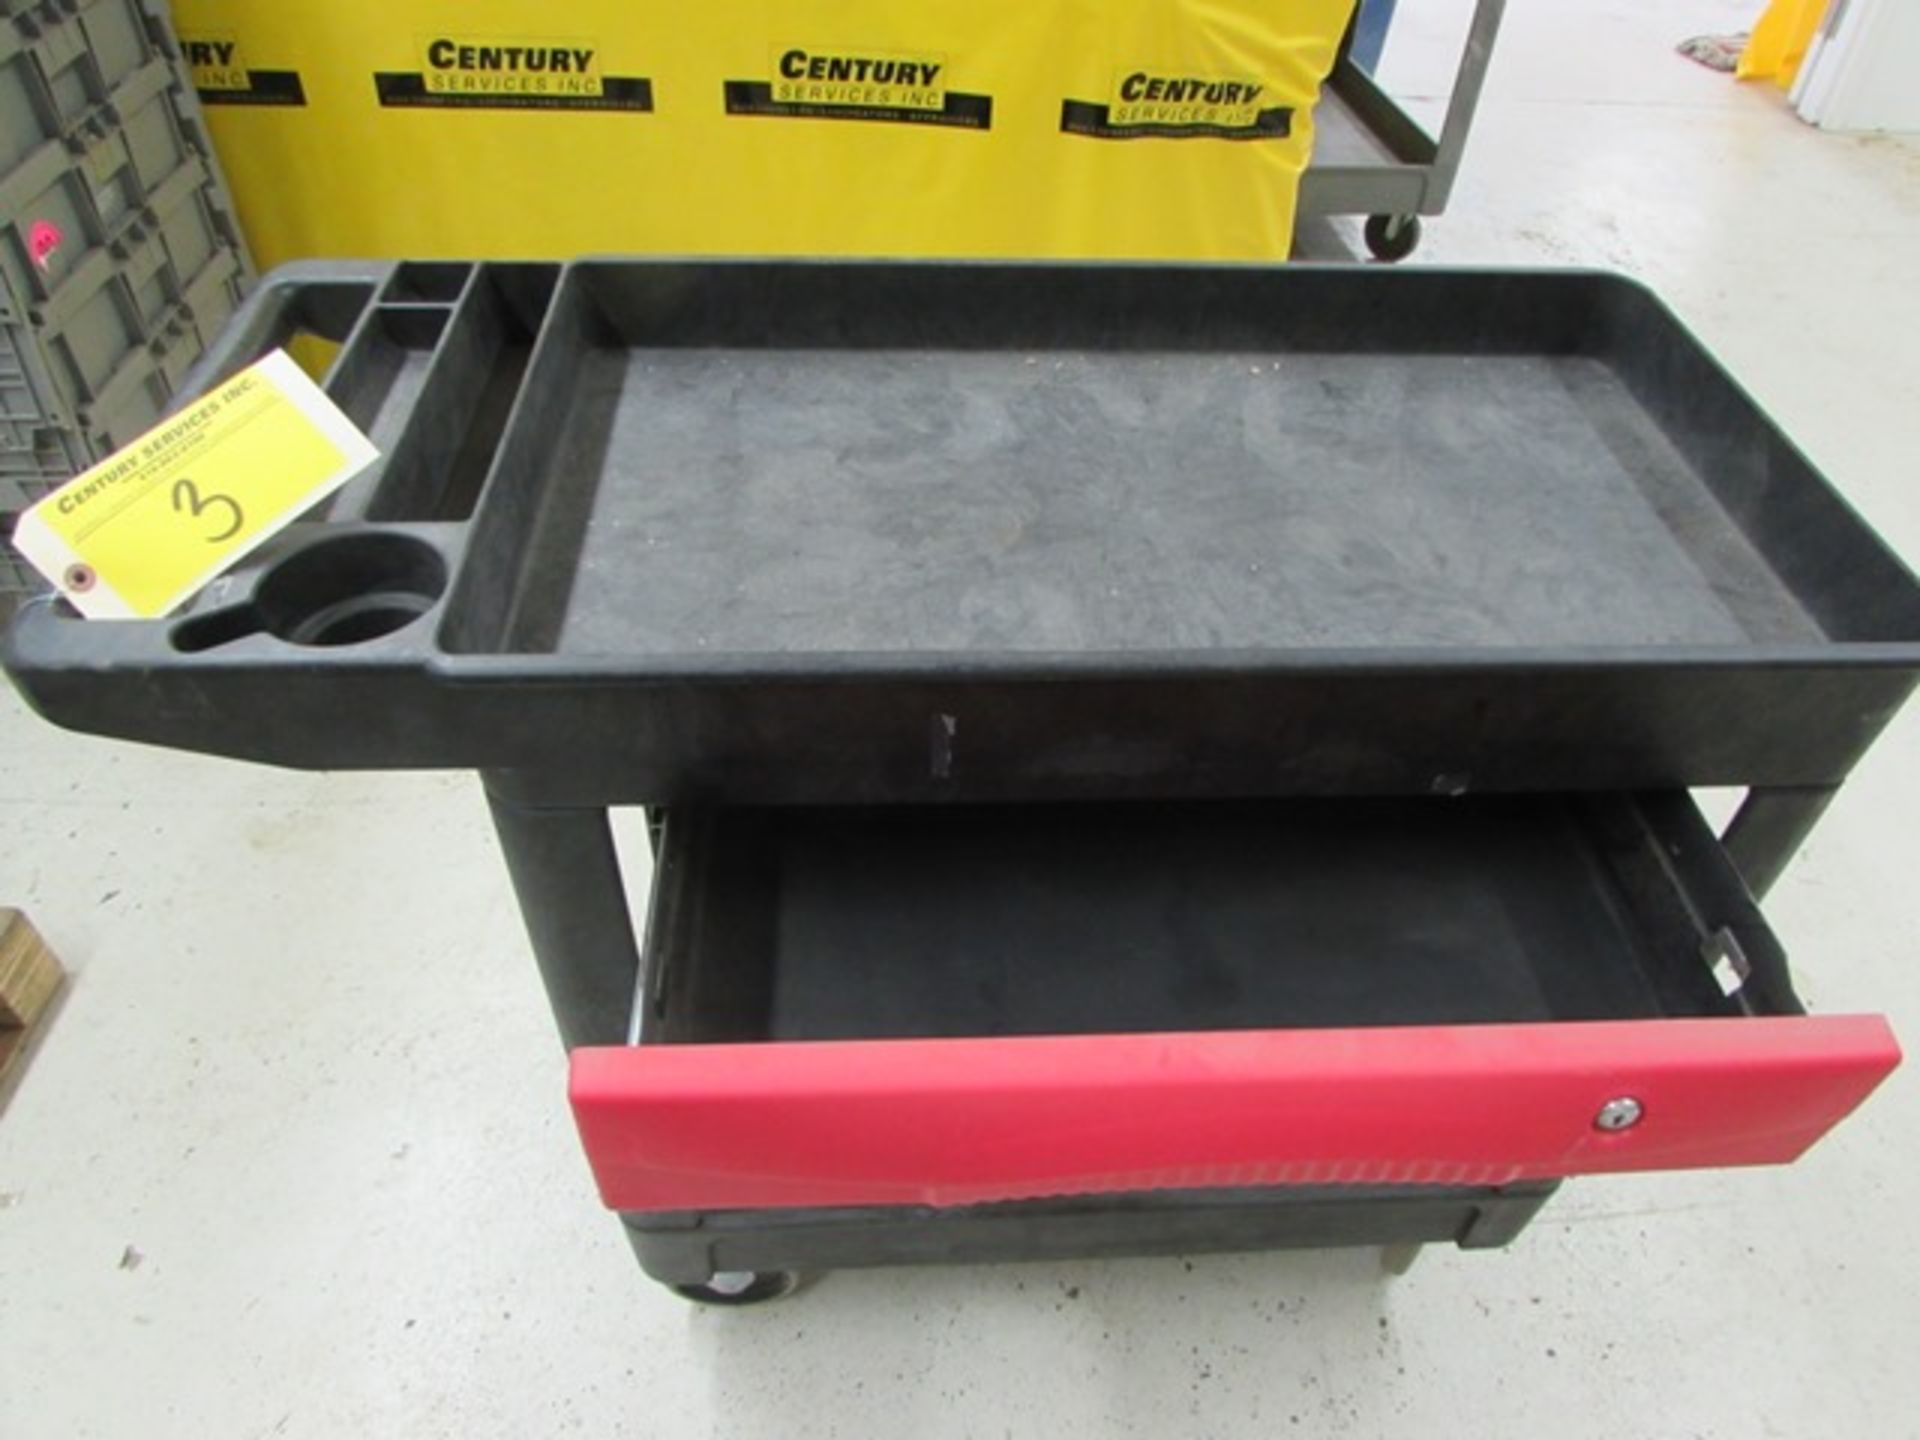 36" x 18" Black Rubbermaid order picking cart c/w slide out storage drawer - Image 2 of 2